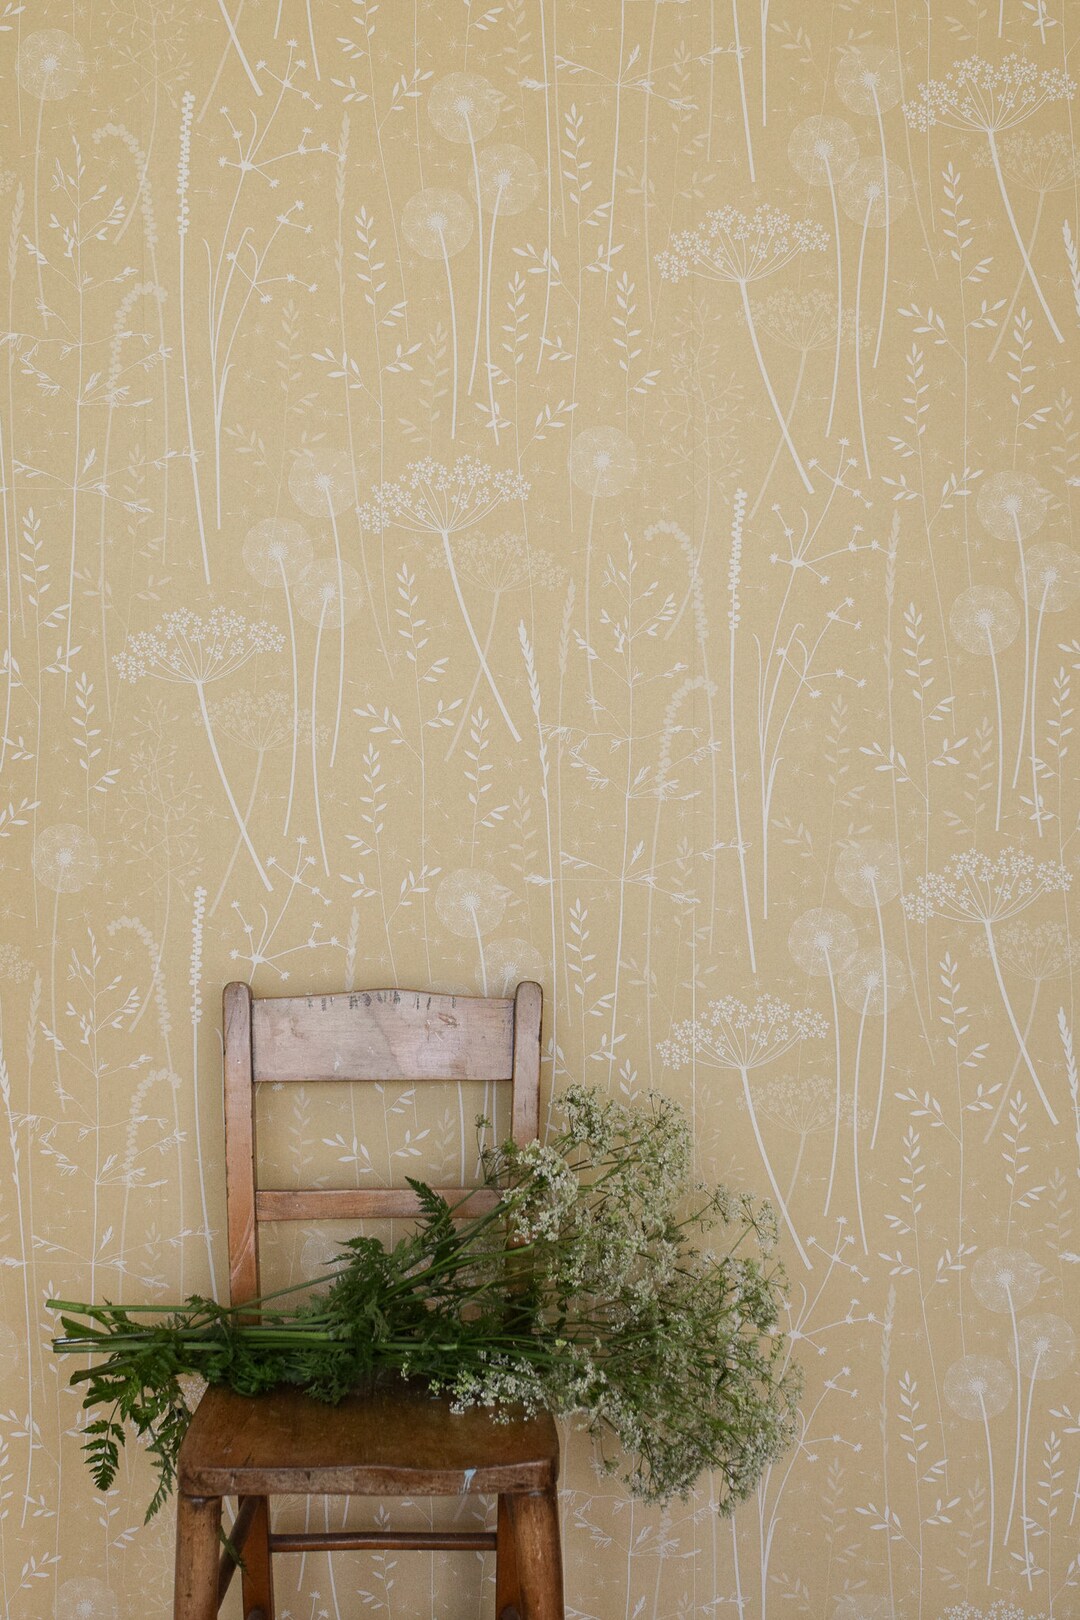 Paper Meadow Wallpaper in 'harvest' by Hannah Nunn, a Warm, Yellow